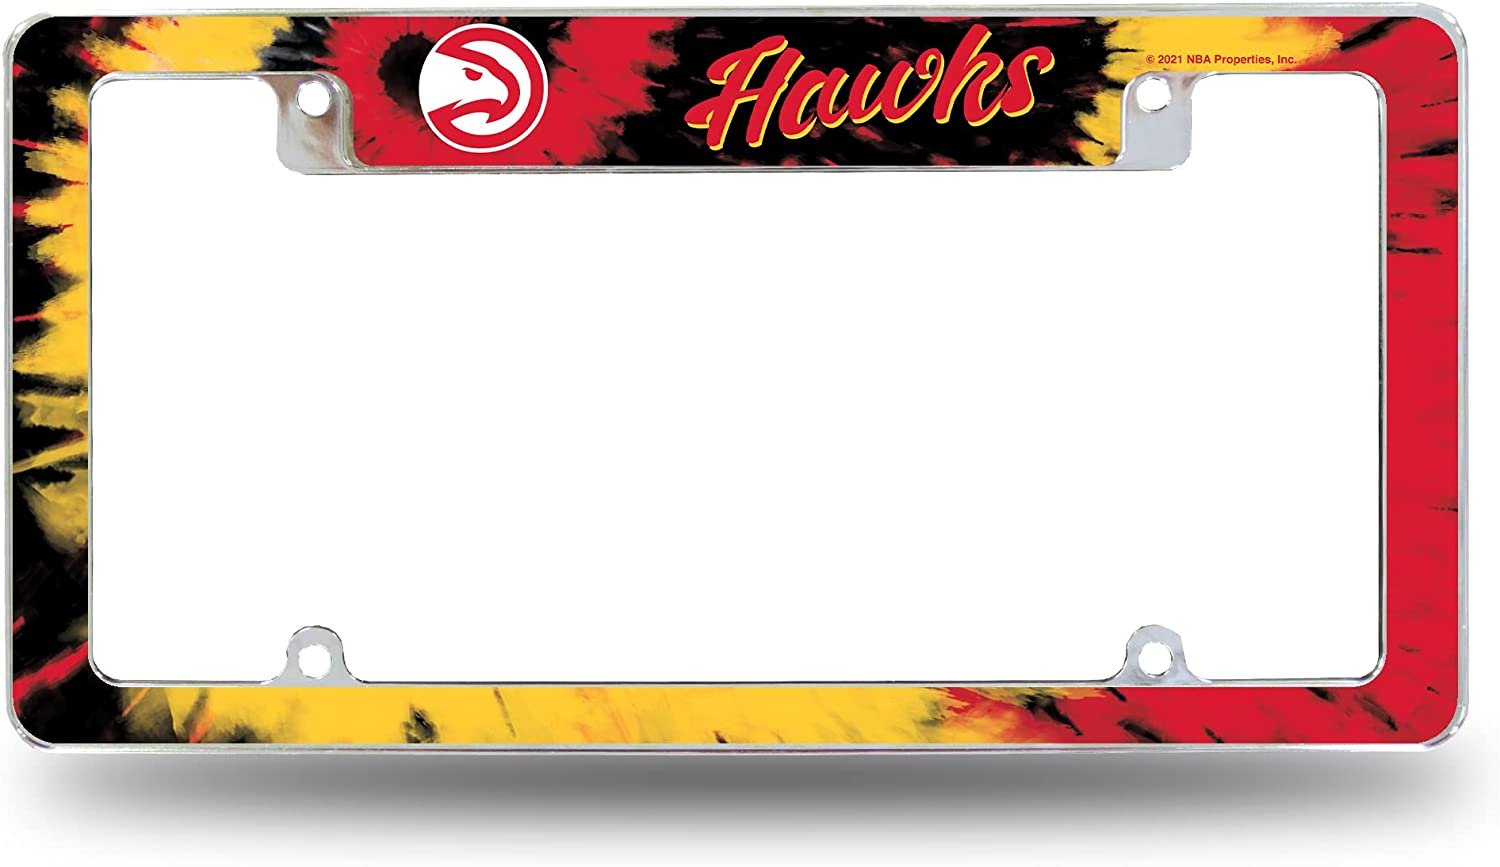 Atlanta Hawks Metal License Plate Frame Chrome Tag Cover Tie Dye Design 6x12 Inch